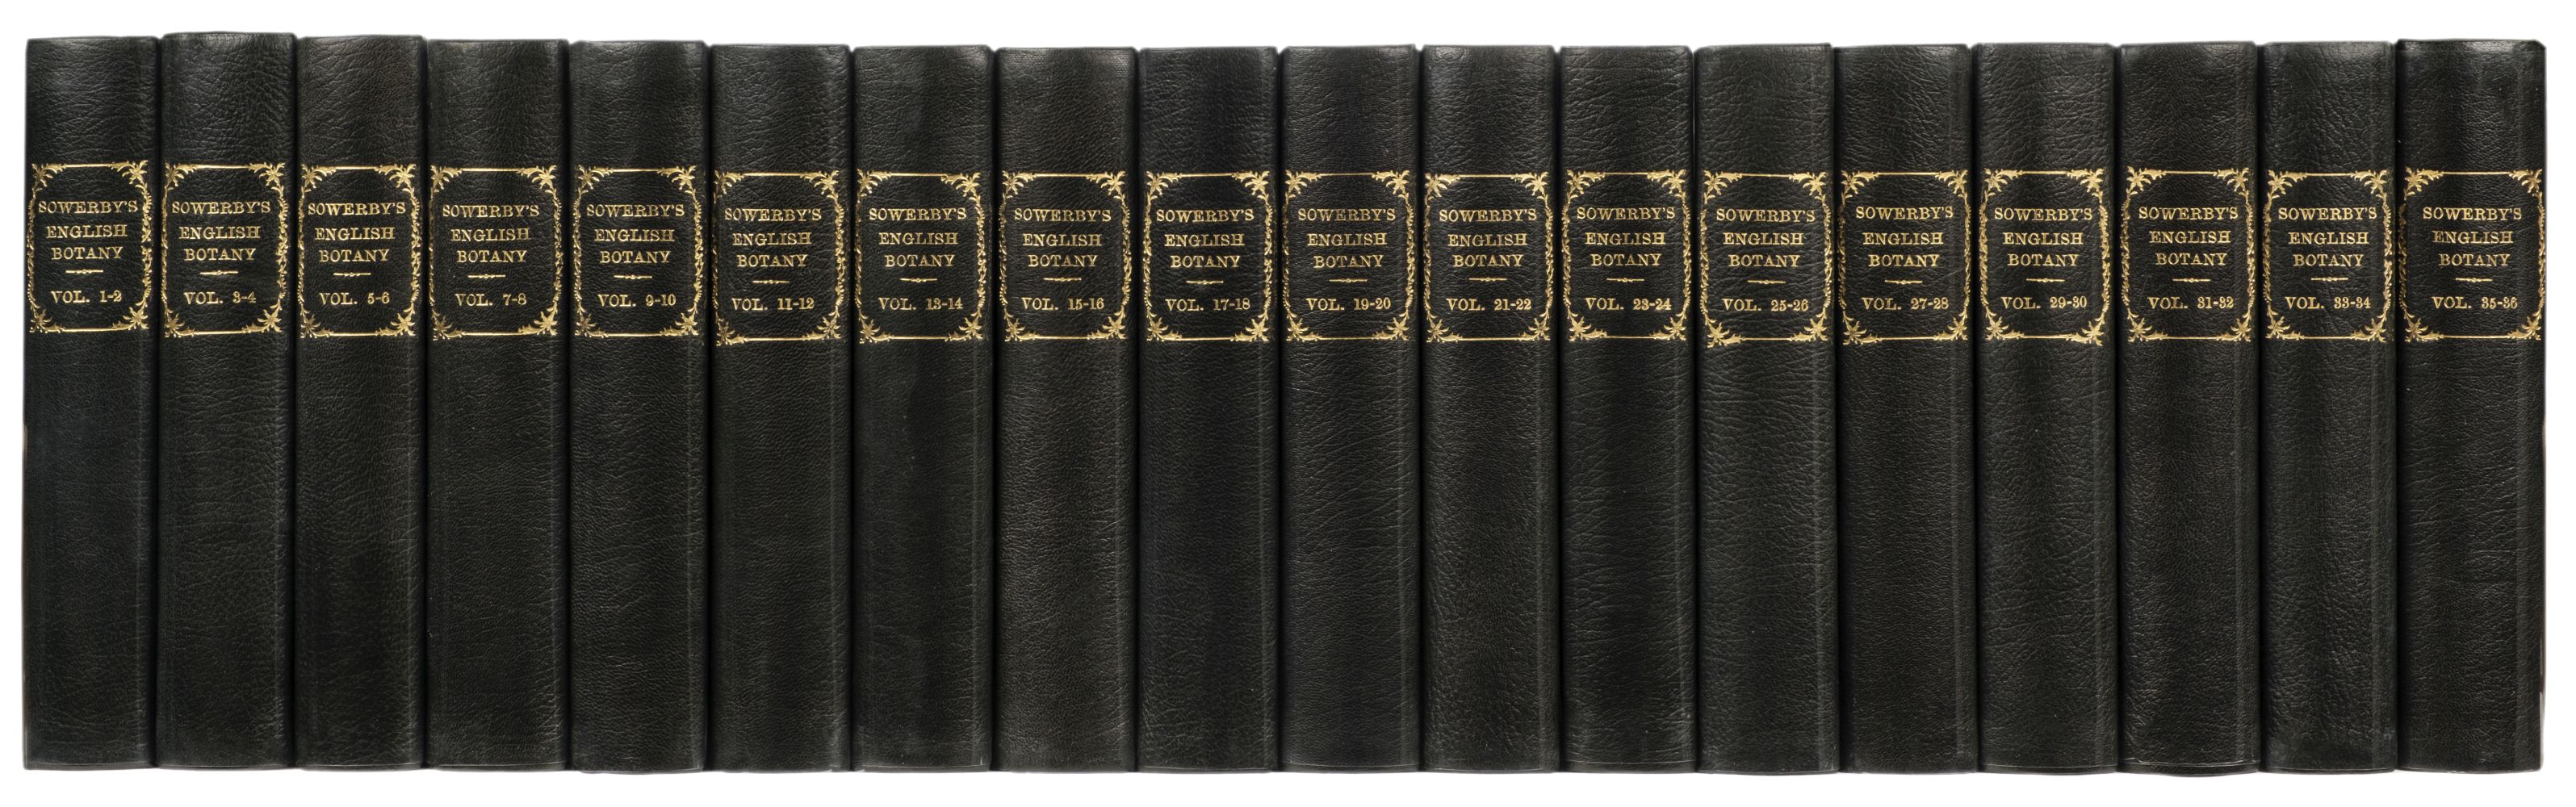 Sowerby (James & Smith, James Edward). English Botany, 36 vols. in 18, London, 1790-1814 - Image 2 of 2